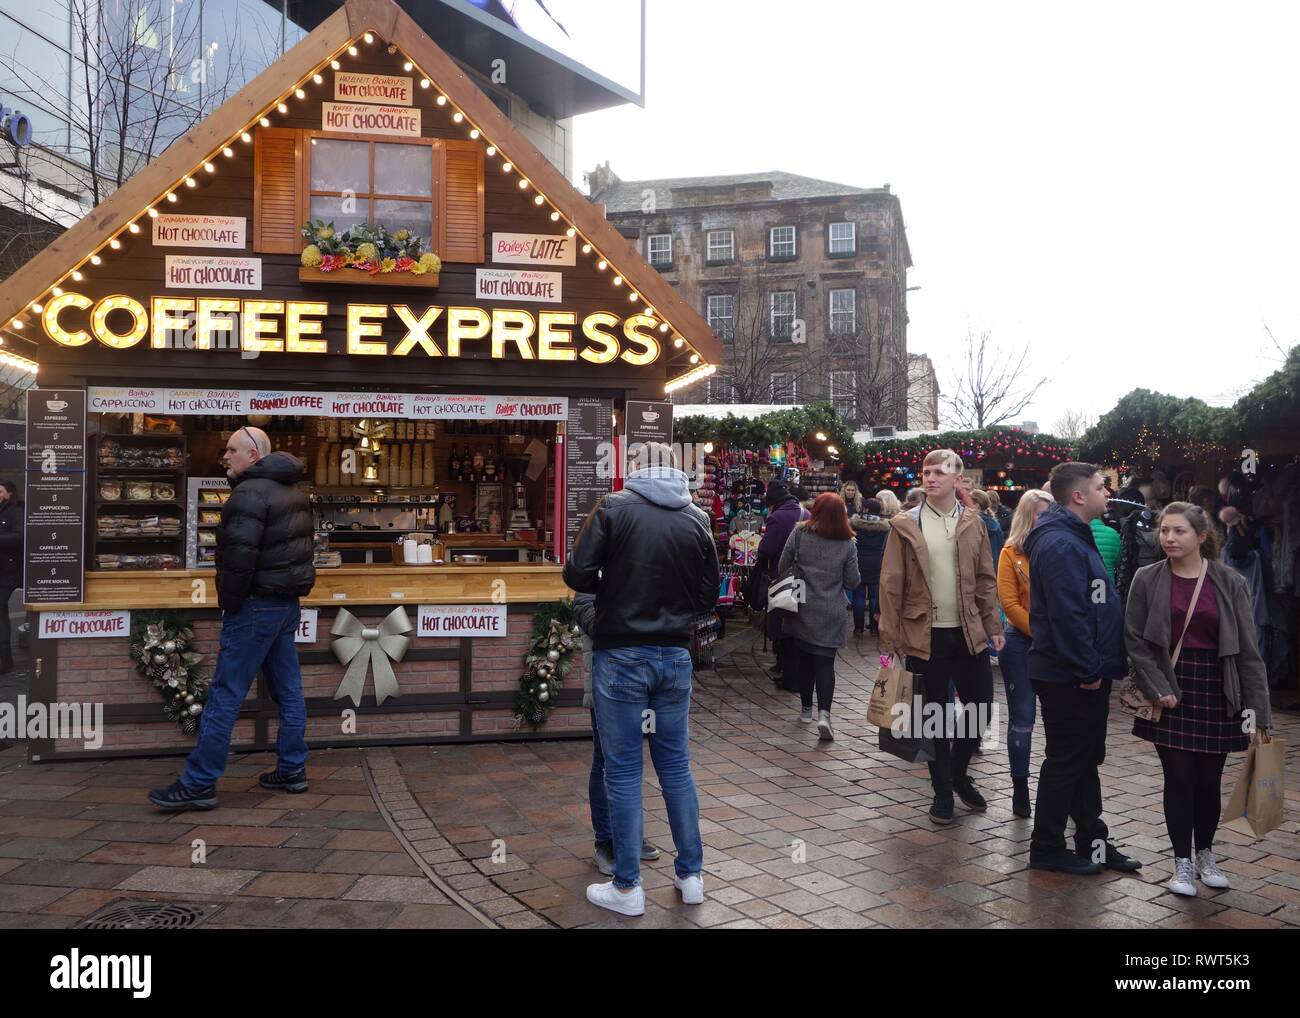 People wandering round enjoying the Christmas market stalls in St. Enoch Square, Glasgow, Scotland, UK, Europe Stock Photo